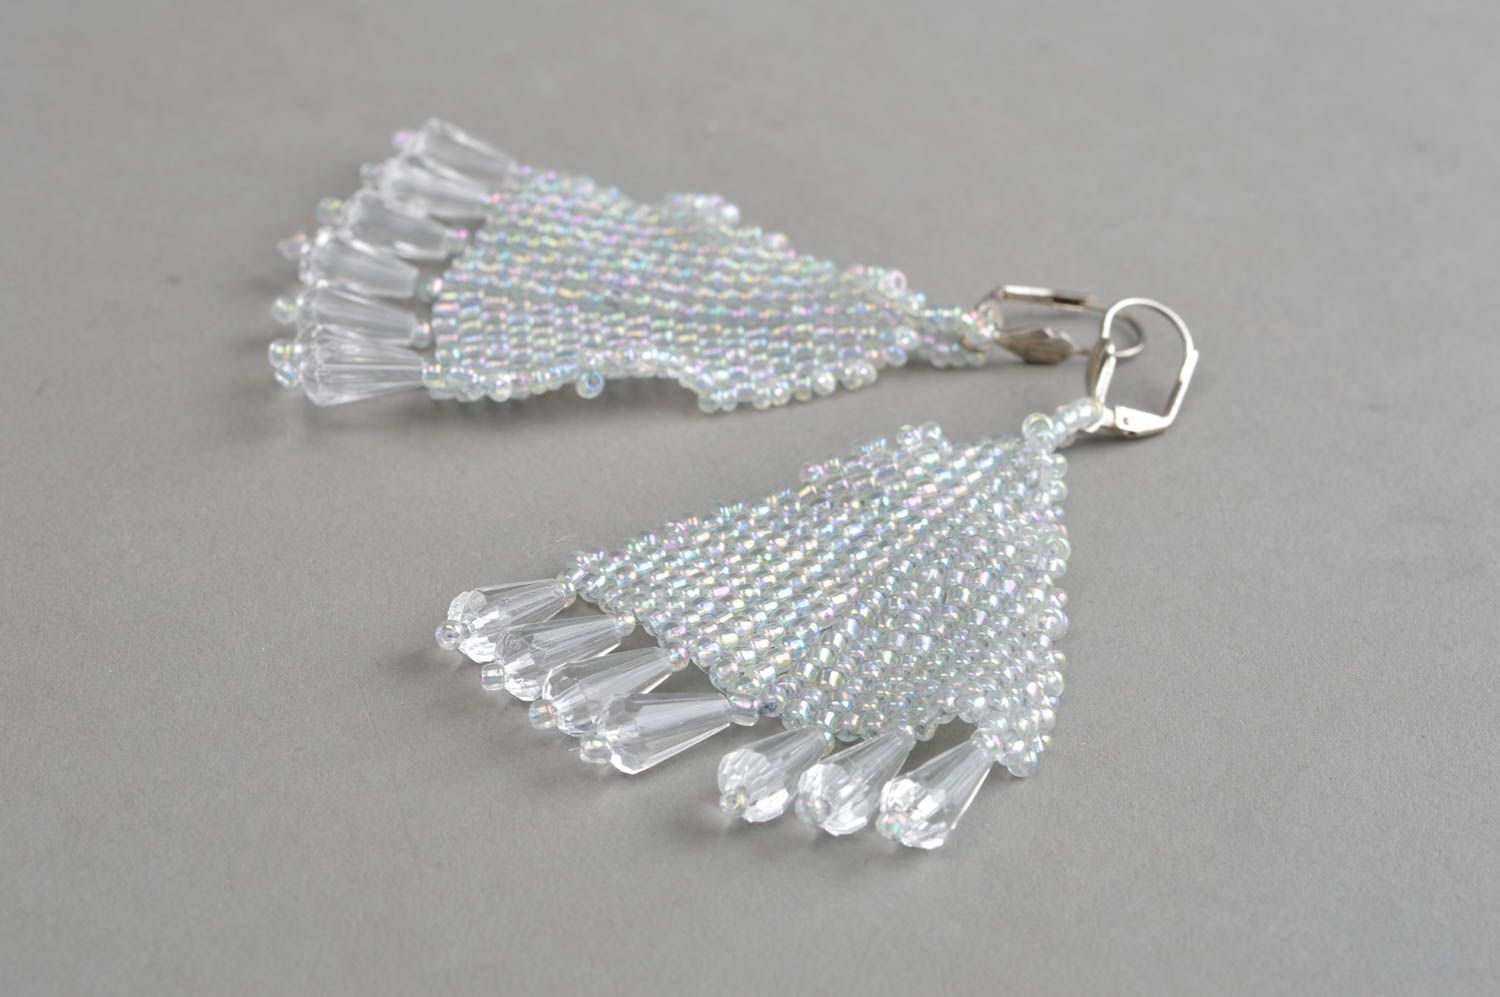 Drop earrings handmade beaded earrings designer accessories for women gift ideas photo 3